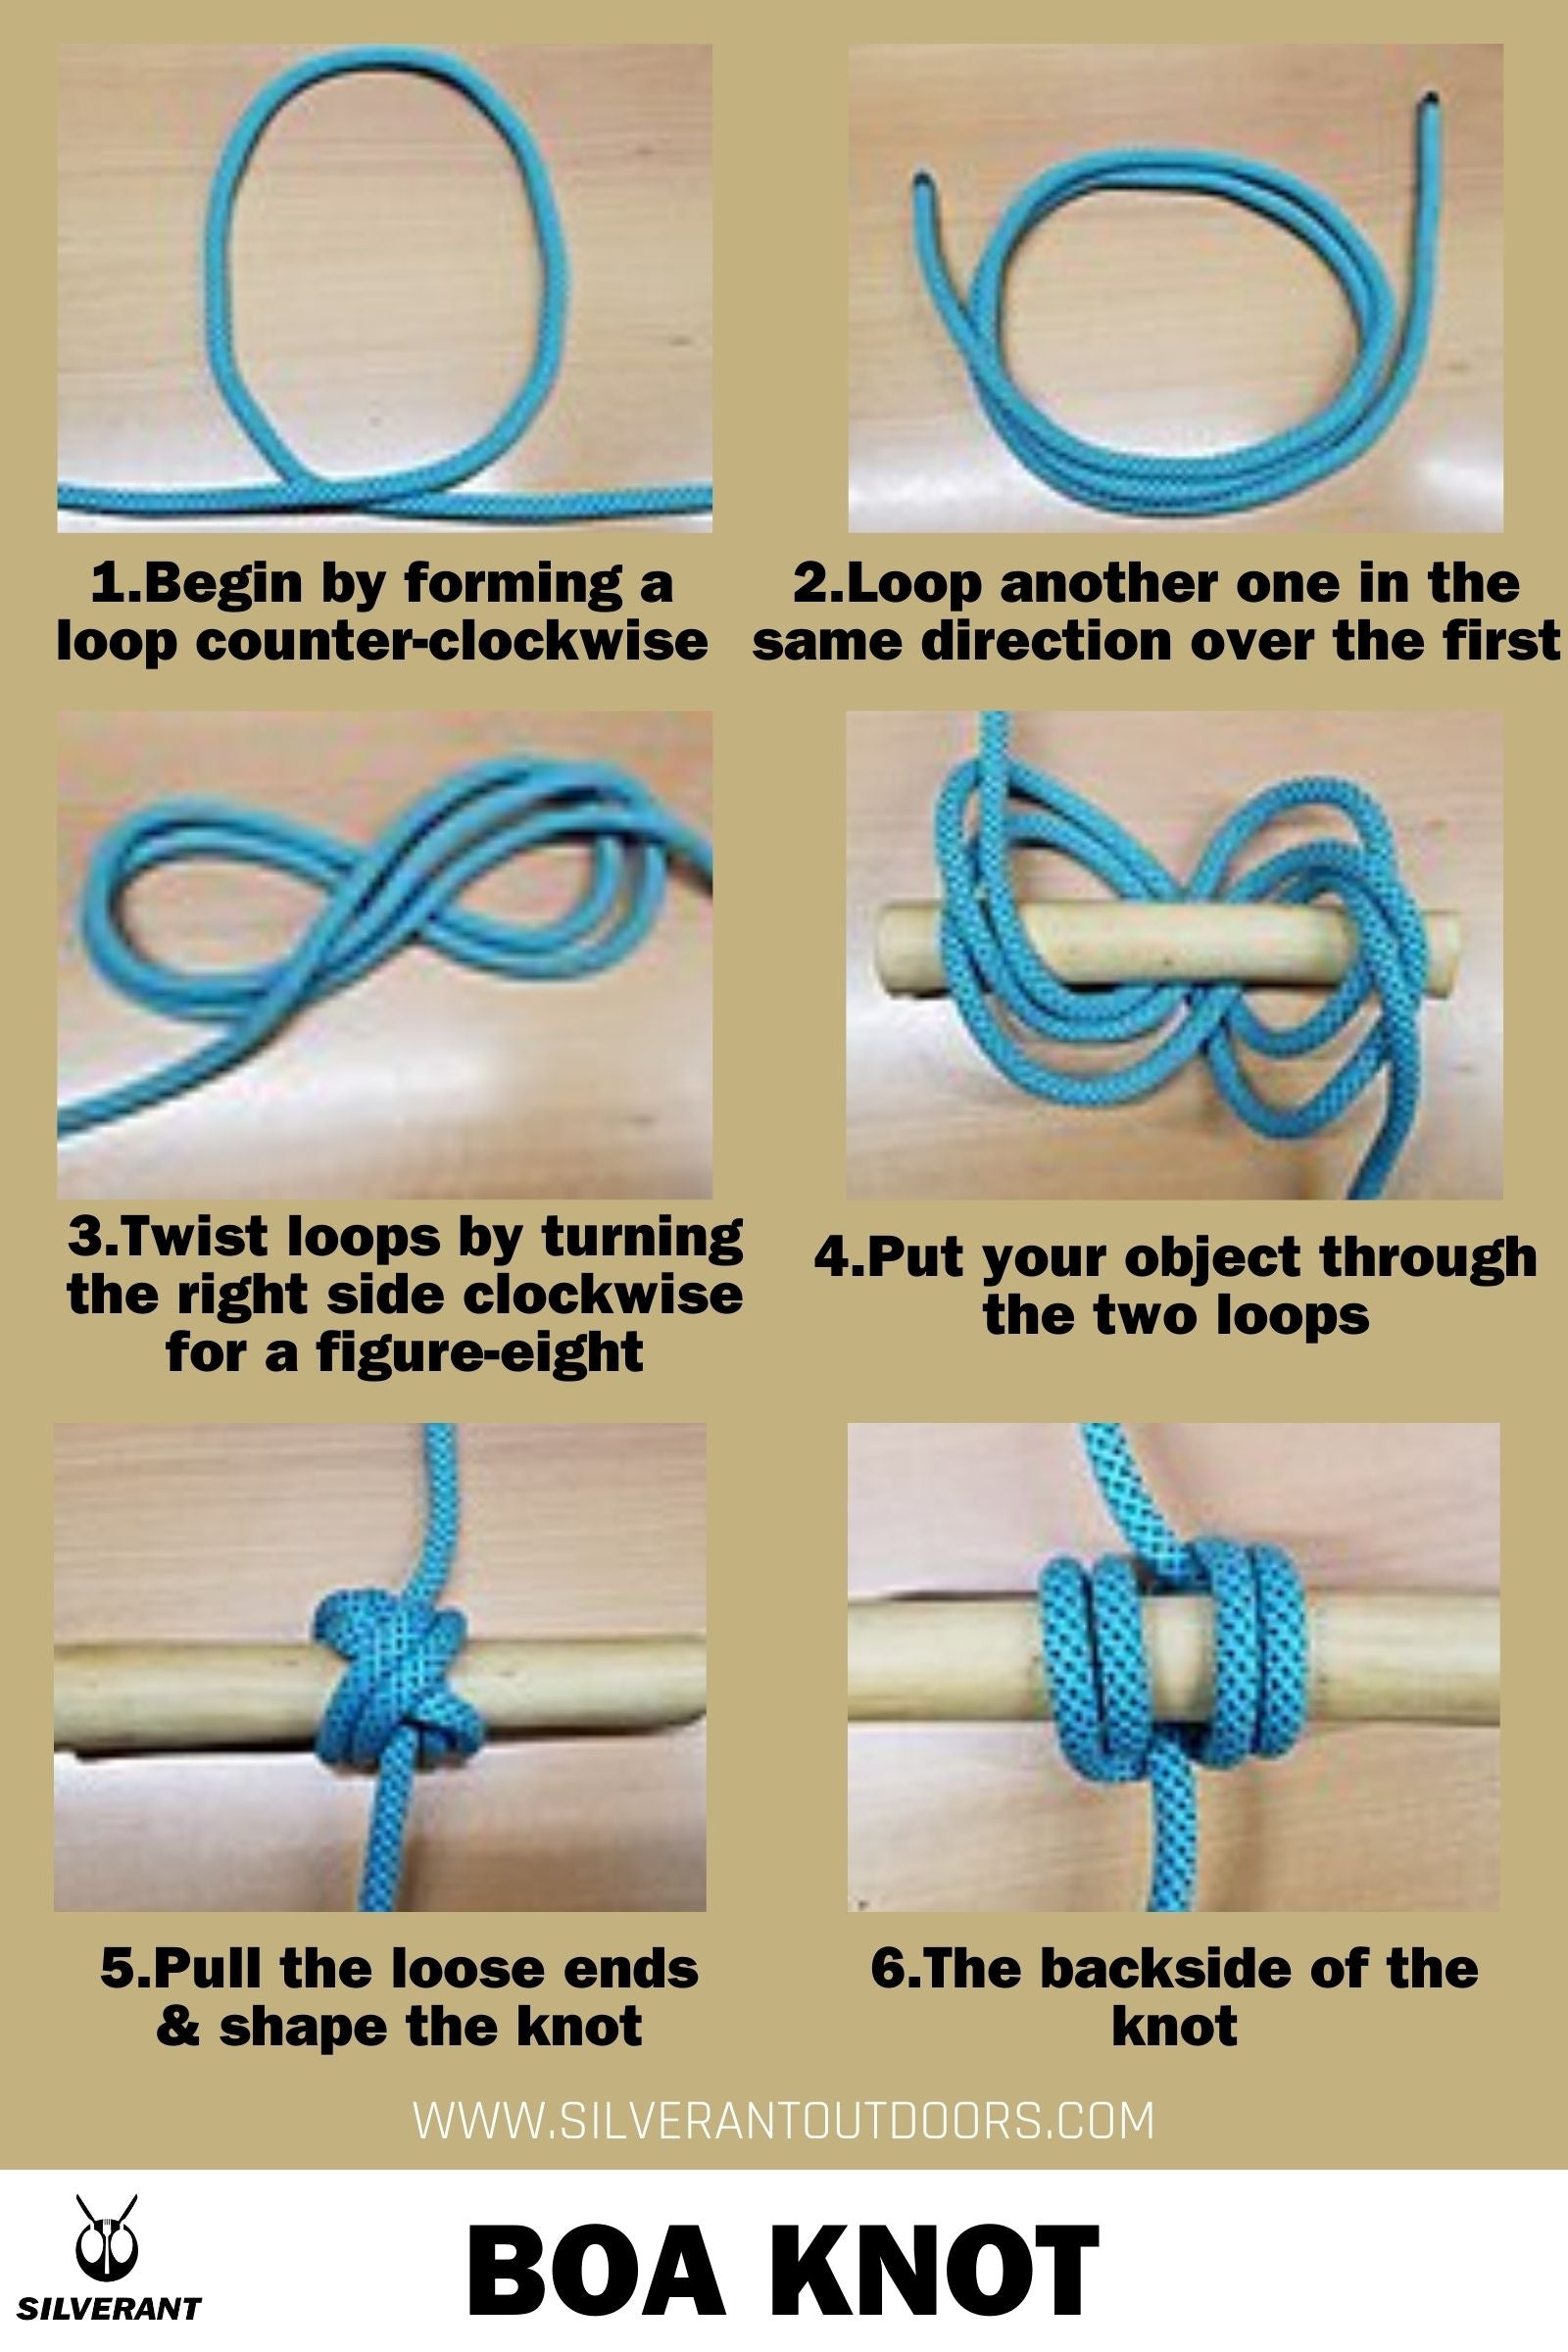 Boa knot